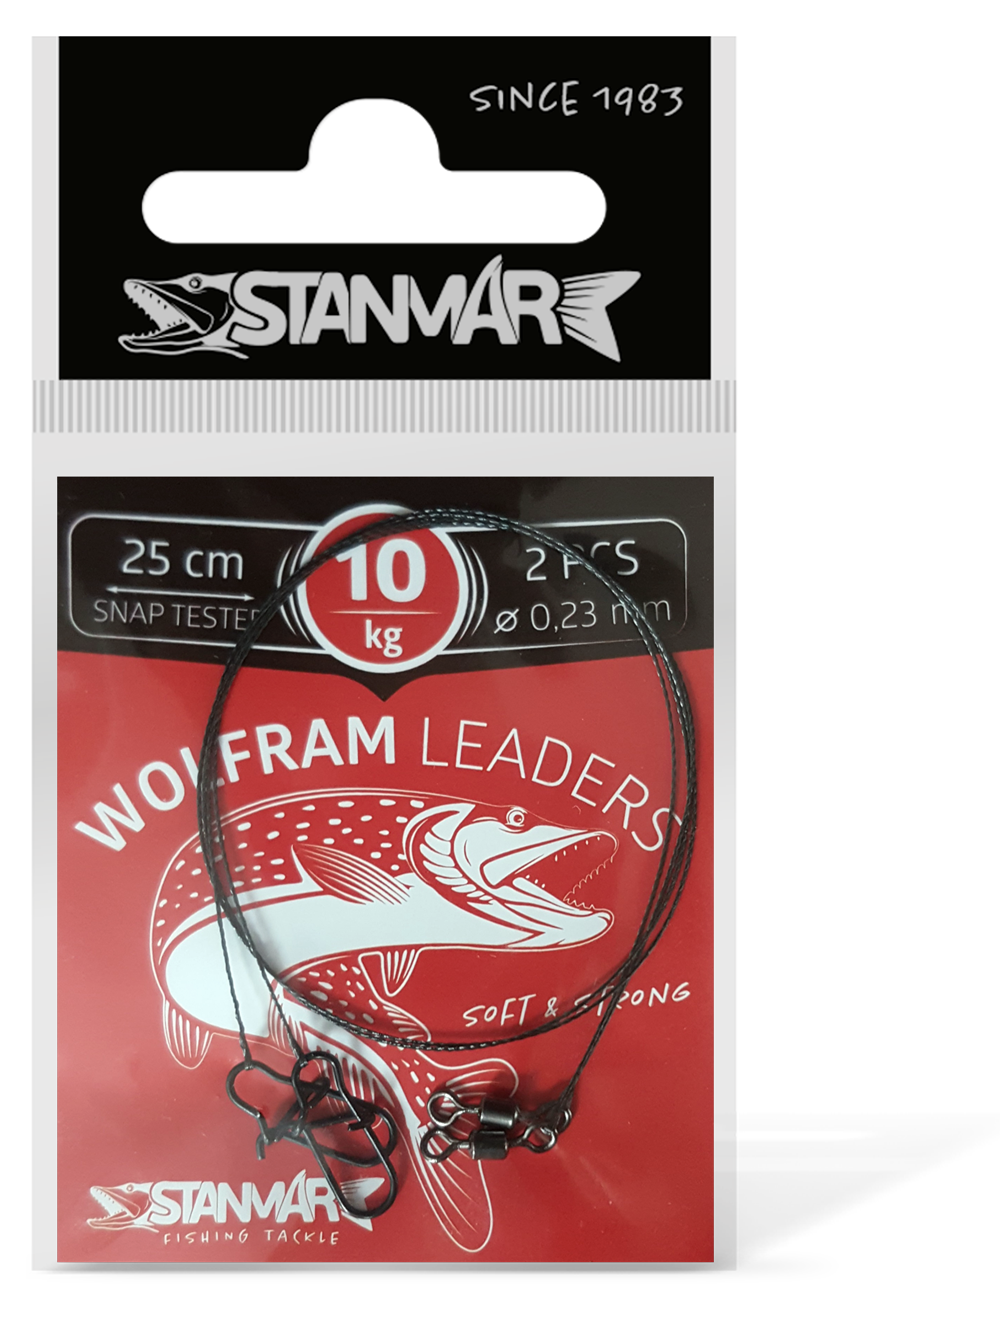 Stan-Mar Wolfram (Tungsten) PIKE Leaders  10kg 